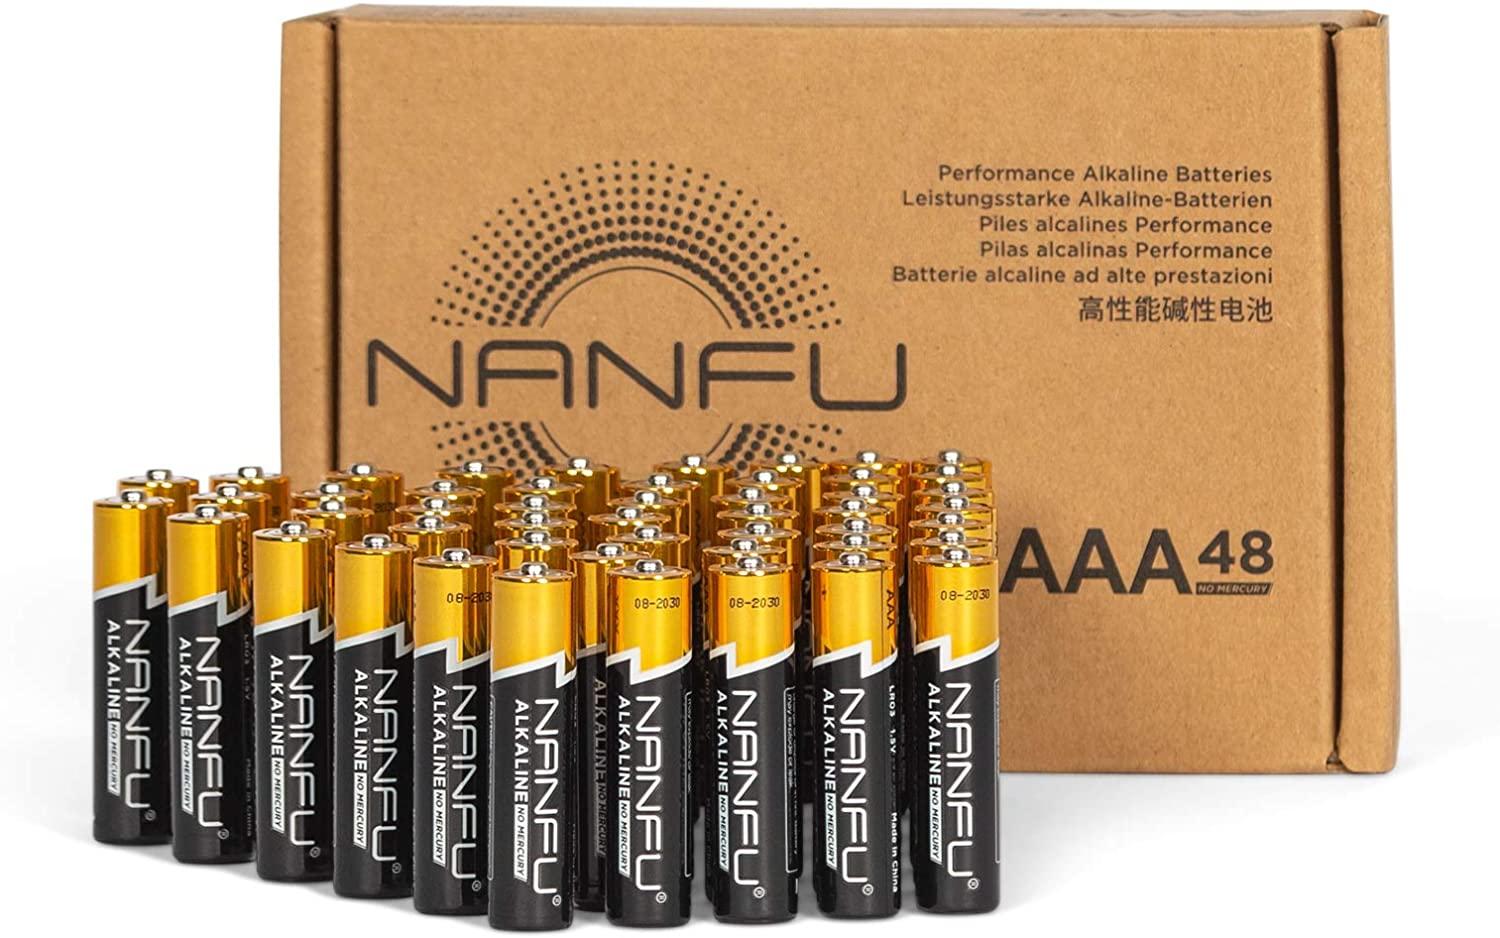 48 Nanfu High Performance AAA Alkaline Batteries for $10.99